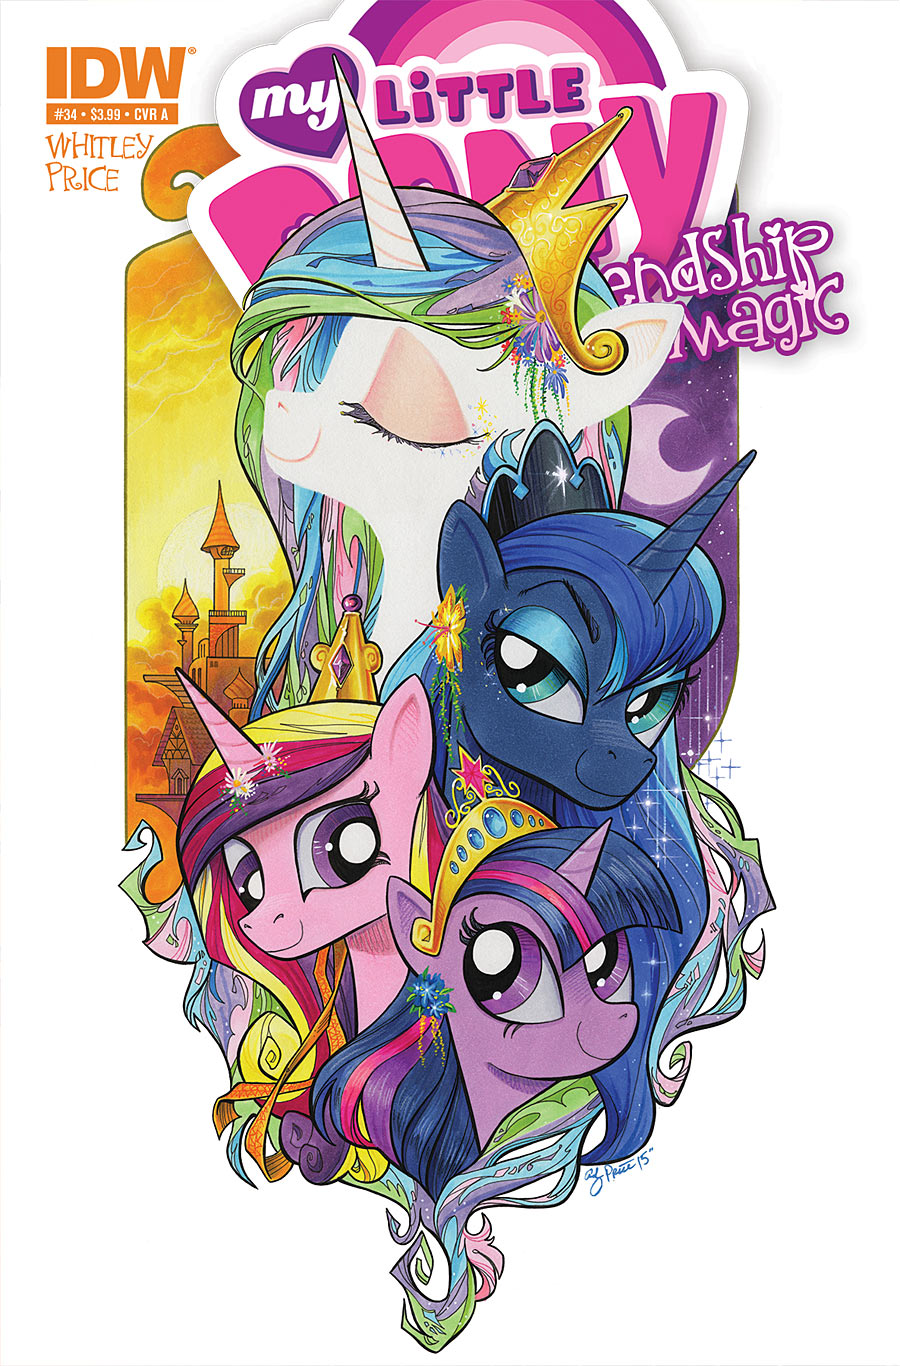 My Little Pony: Friendship is Magic #34